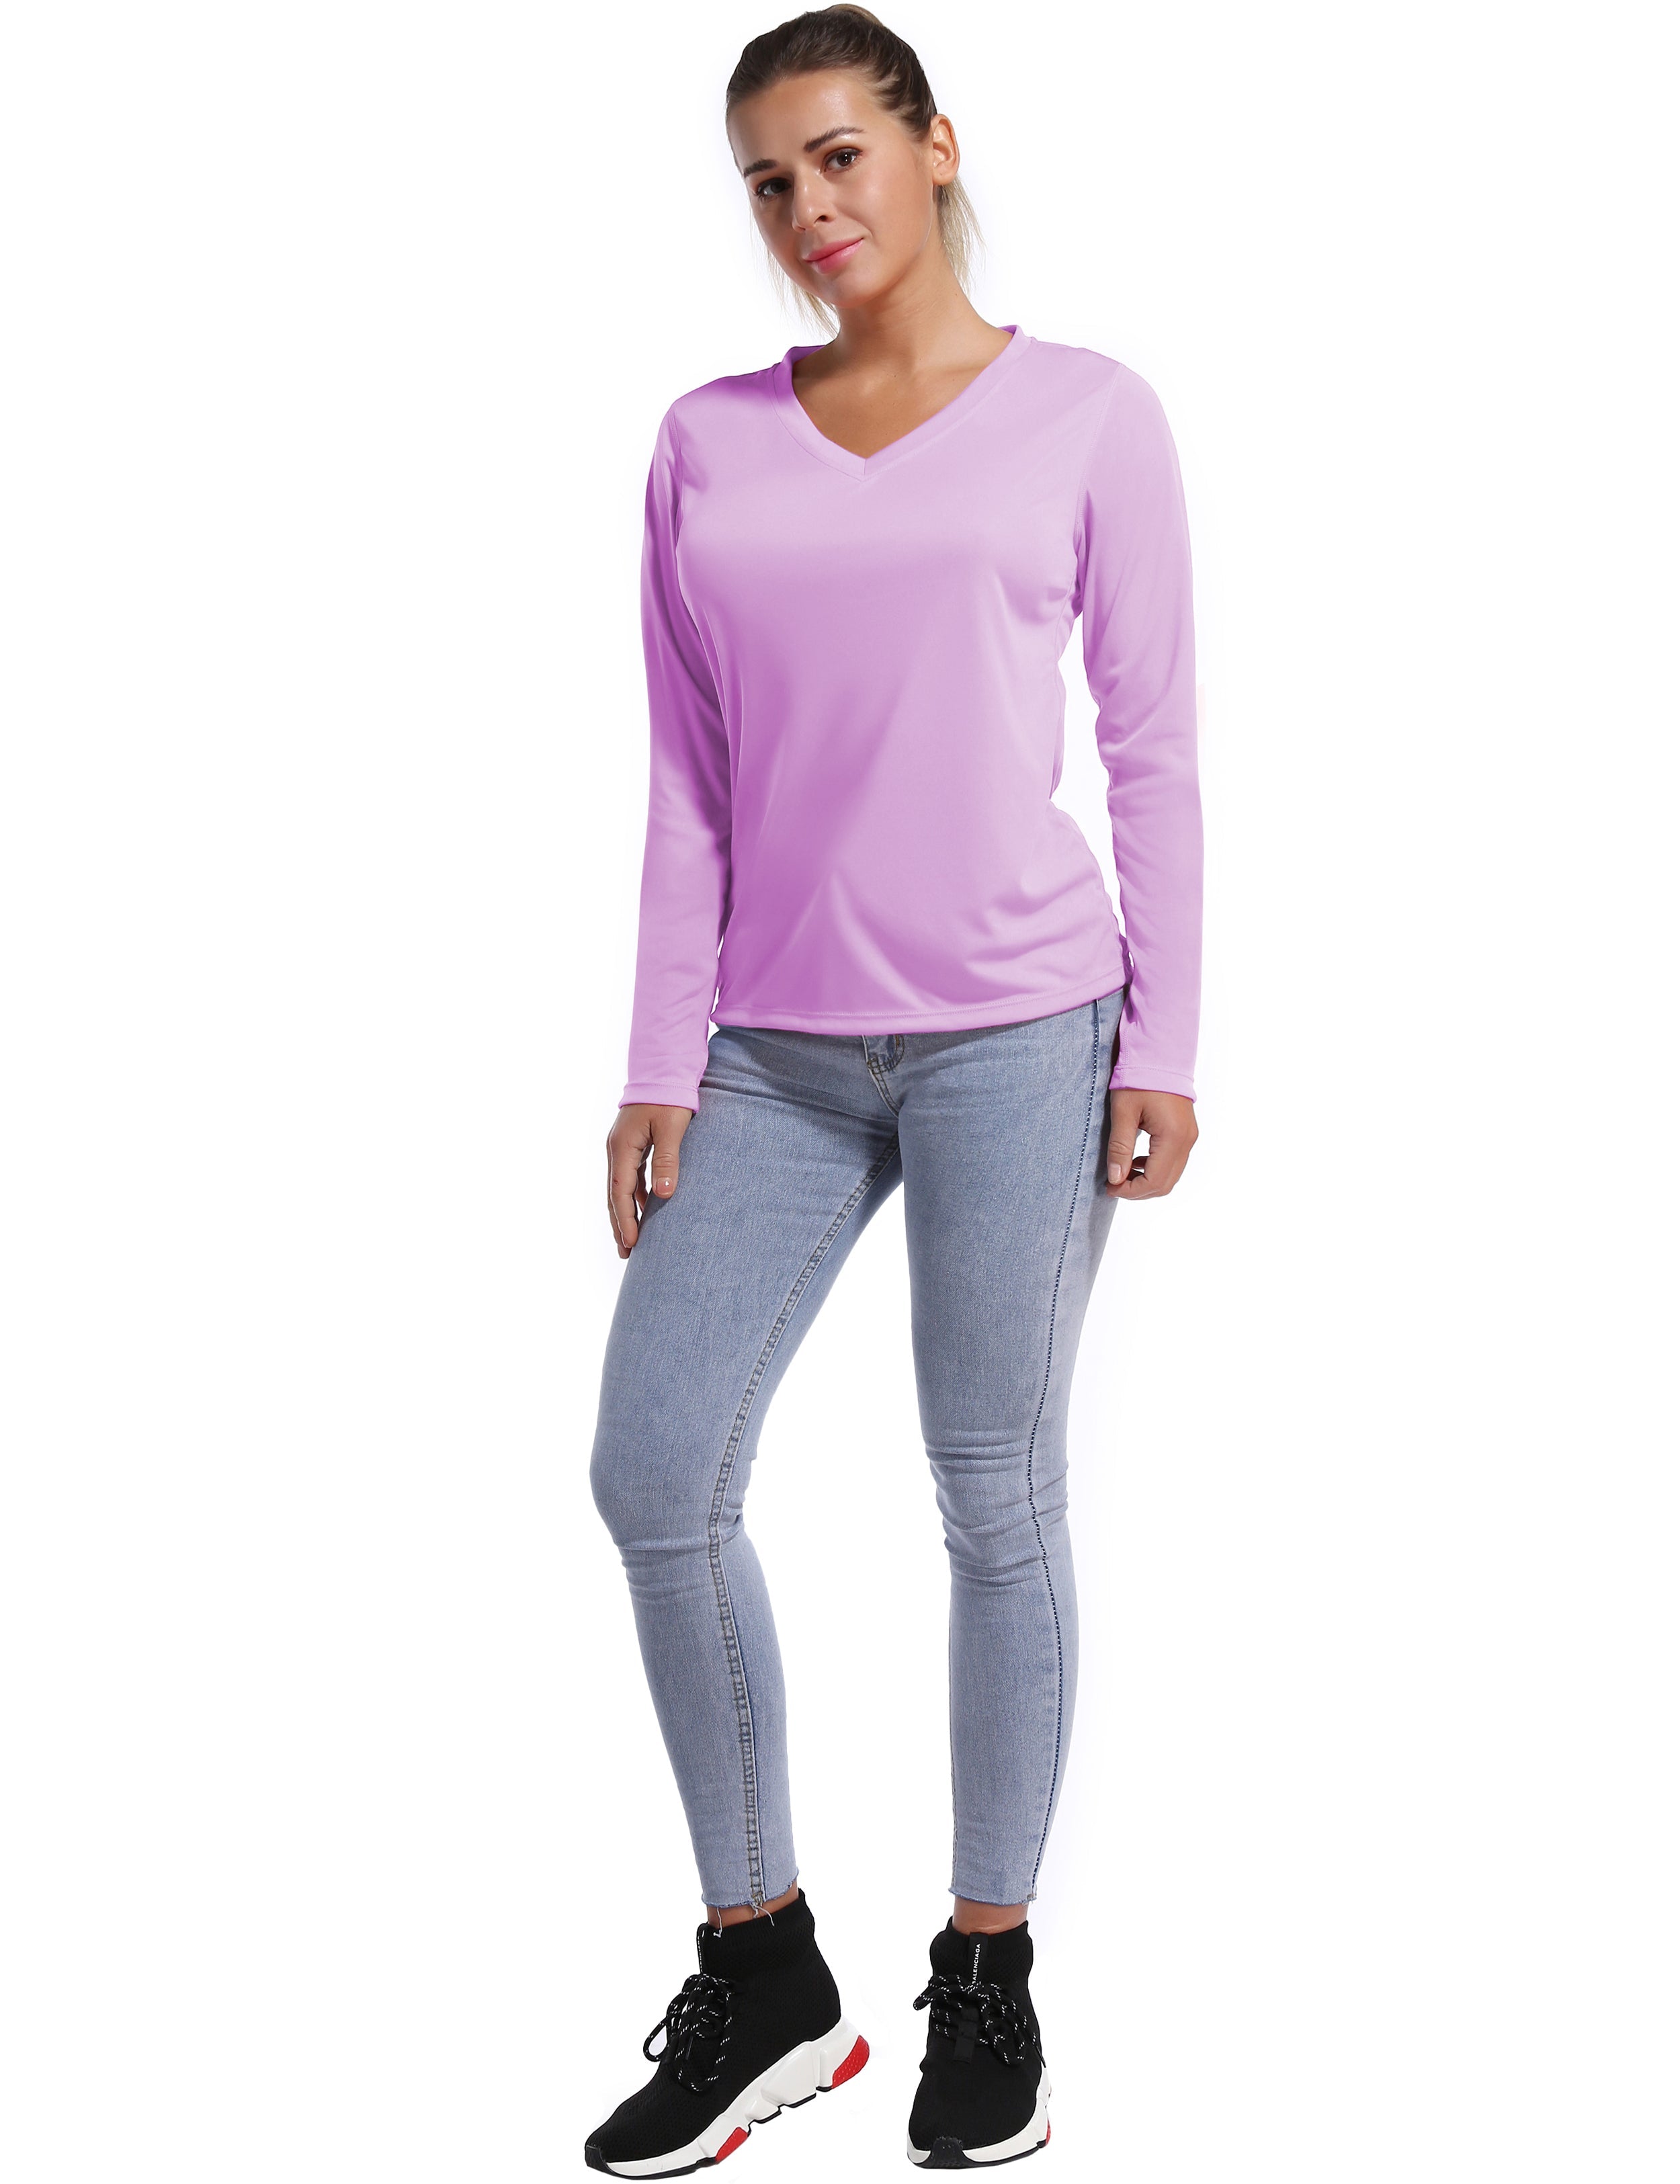 V Neck Long Sleeve Athletic Shirts purple_Running